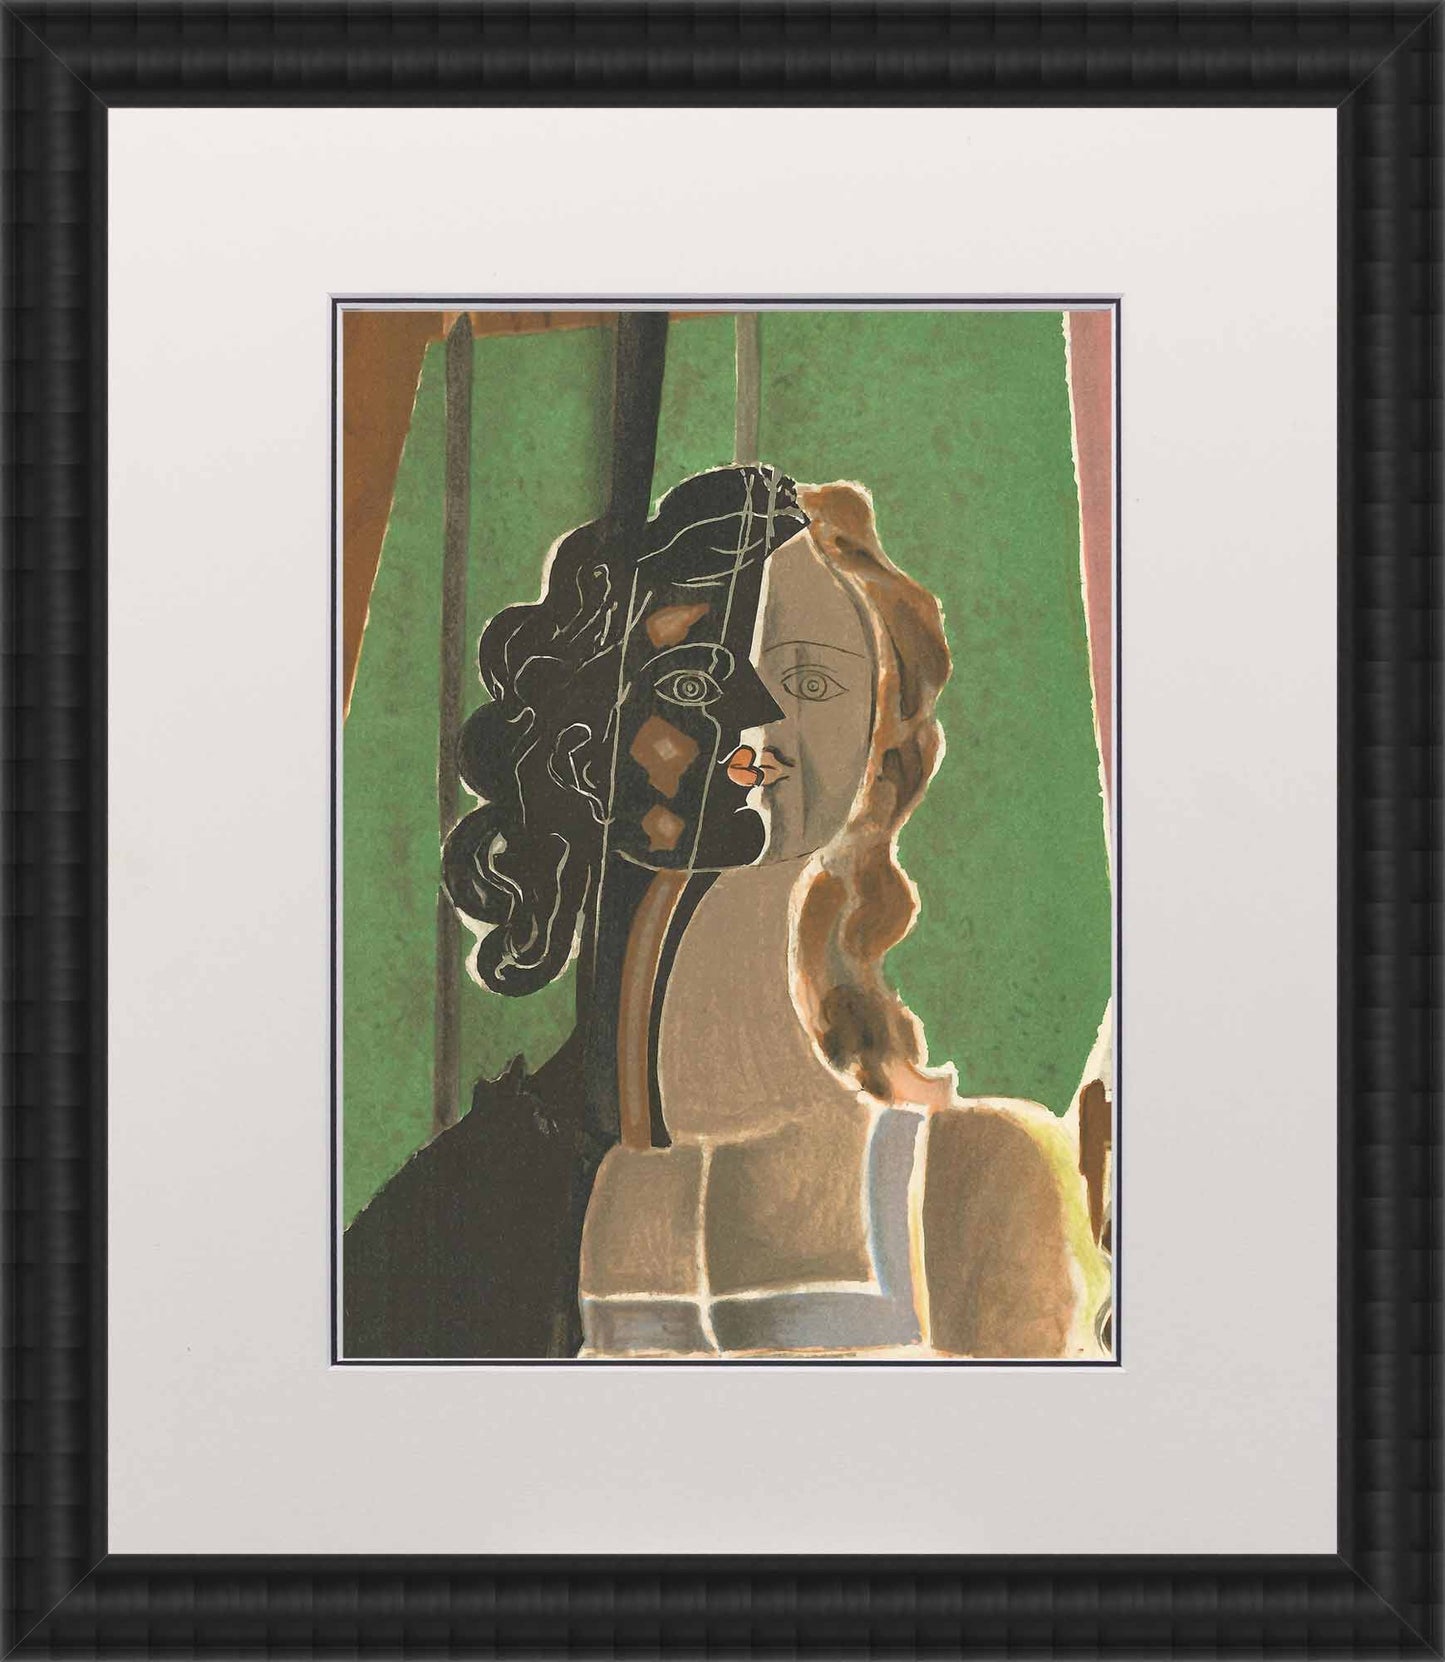 Georges Braque, "Figure"